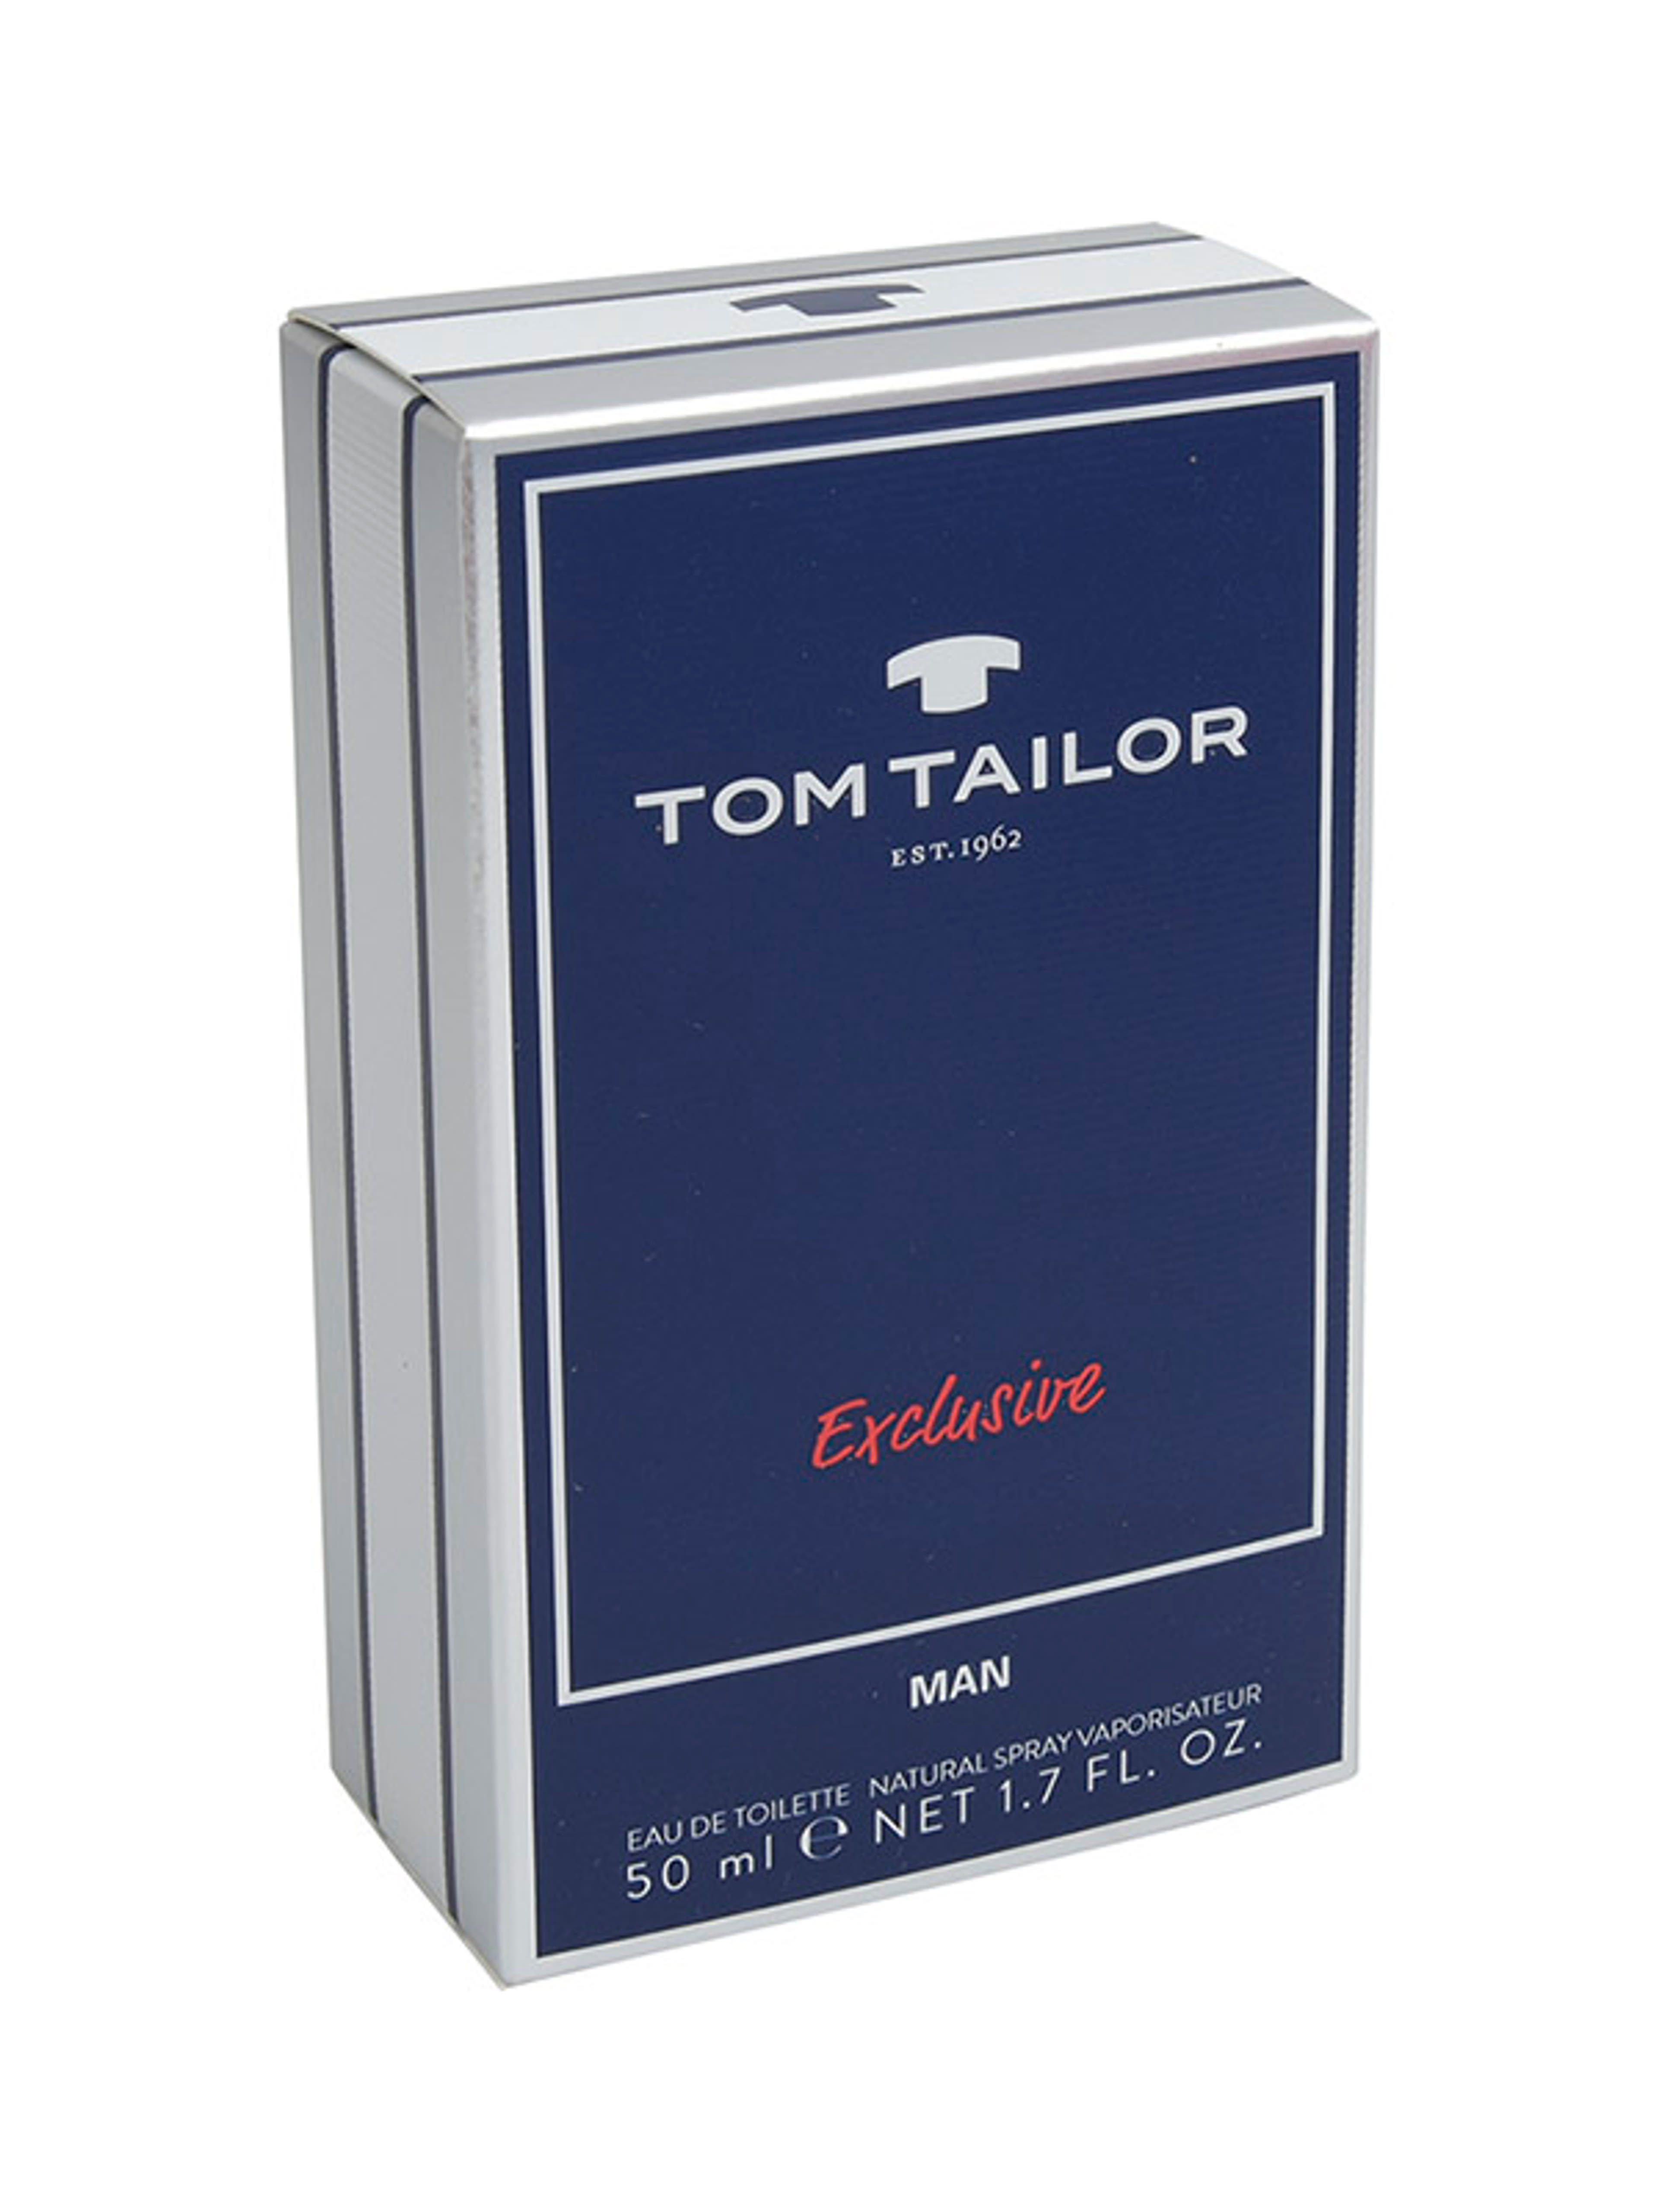 Tom Tailor Exclusive férfi Eau de Toilette - 50 ml